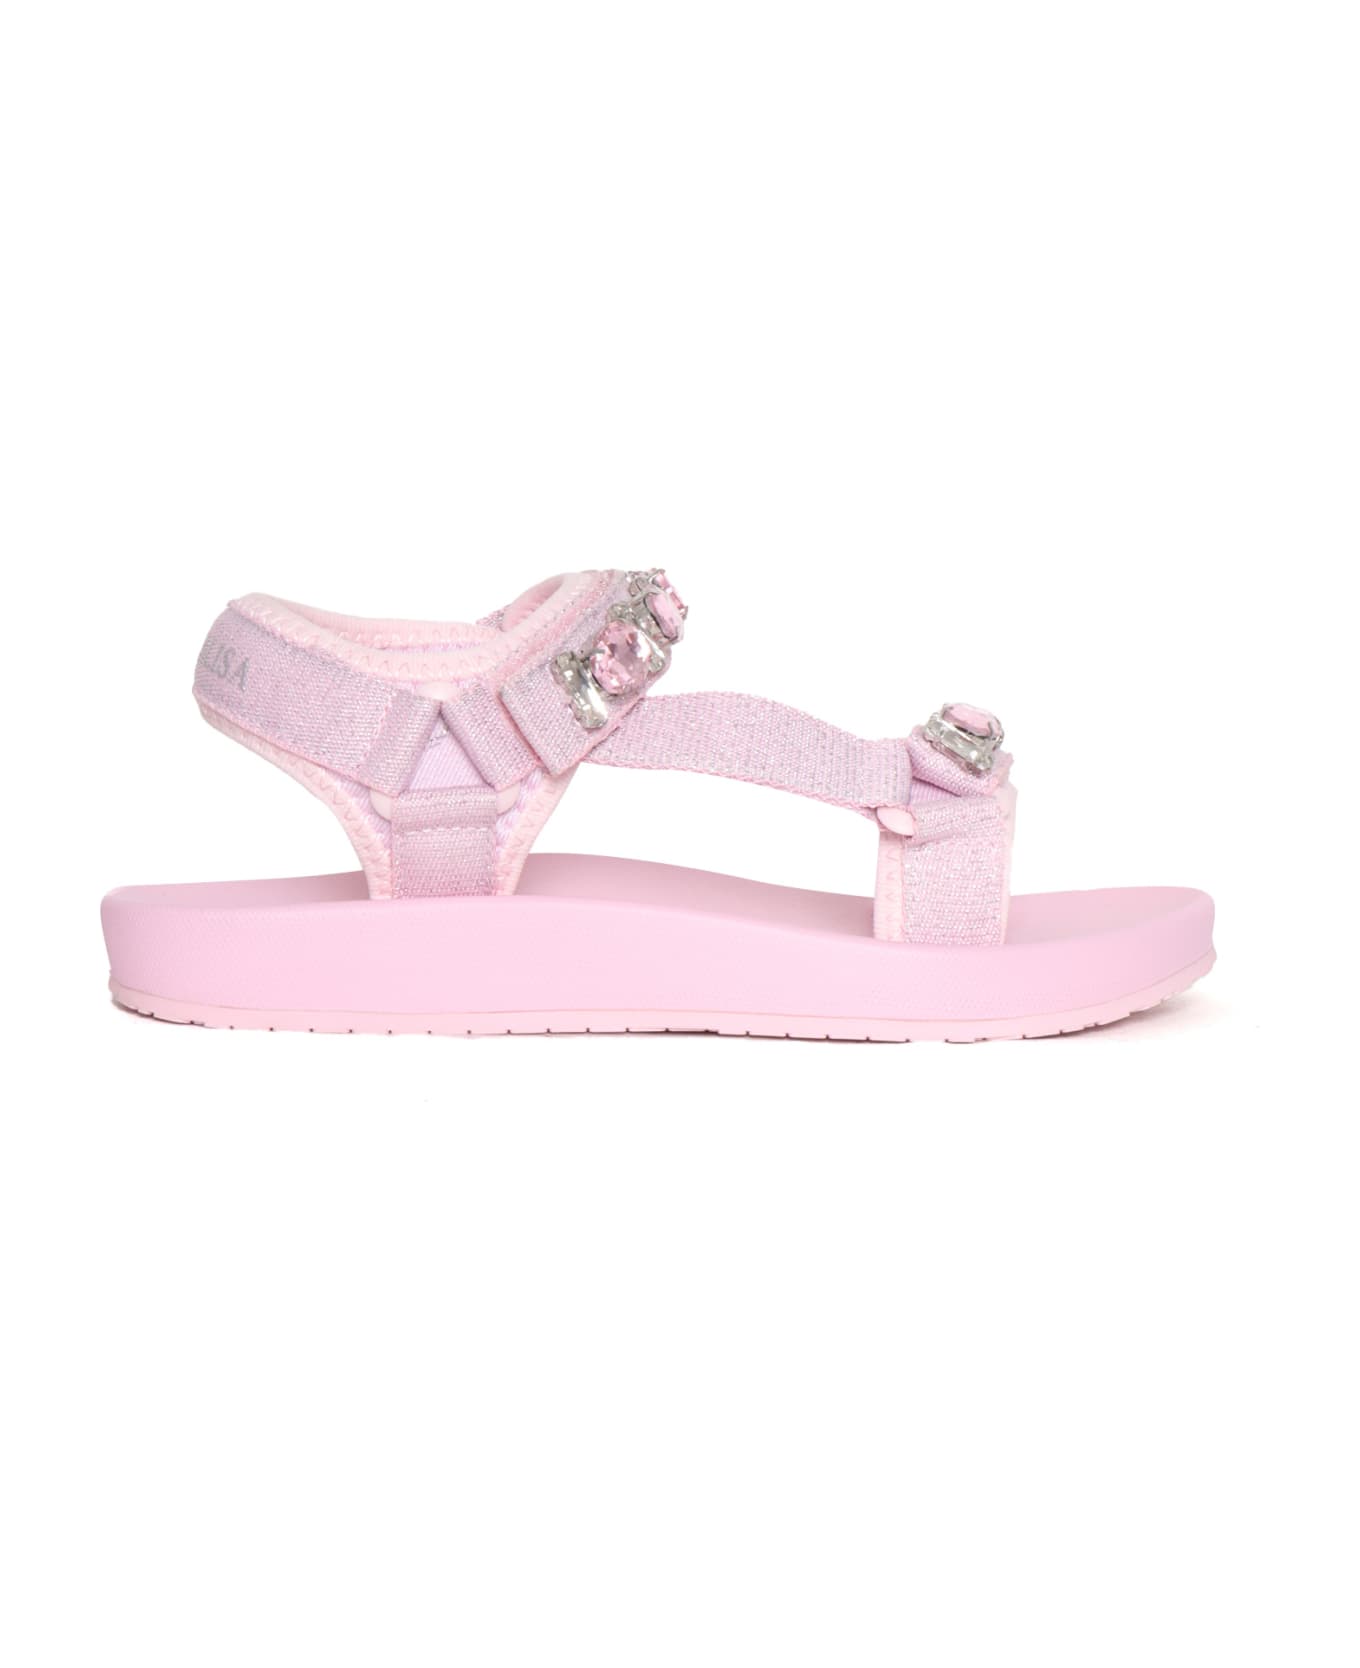 Monnalisa Pink Technical Sandals - PINK